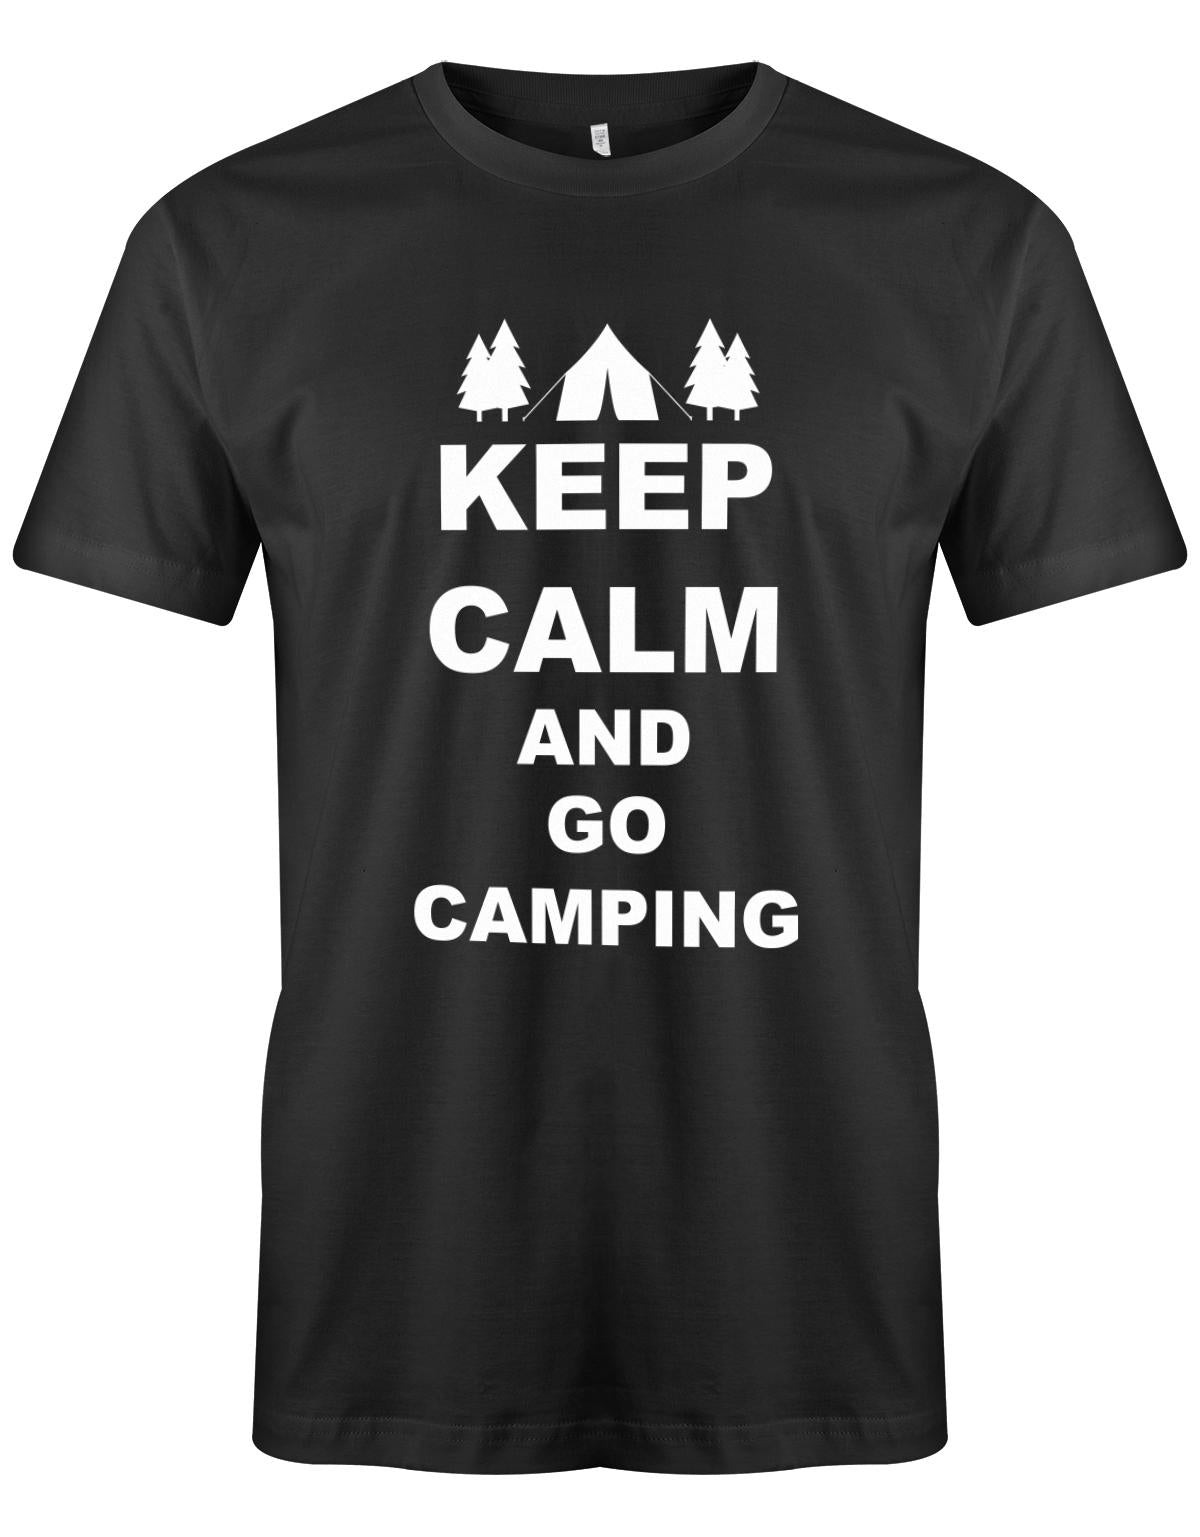 Keep-Calm-and-Go-Camping-Herren-Shirt-schwarz